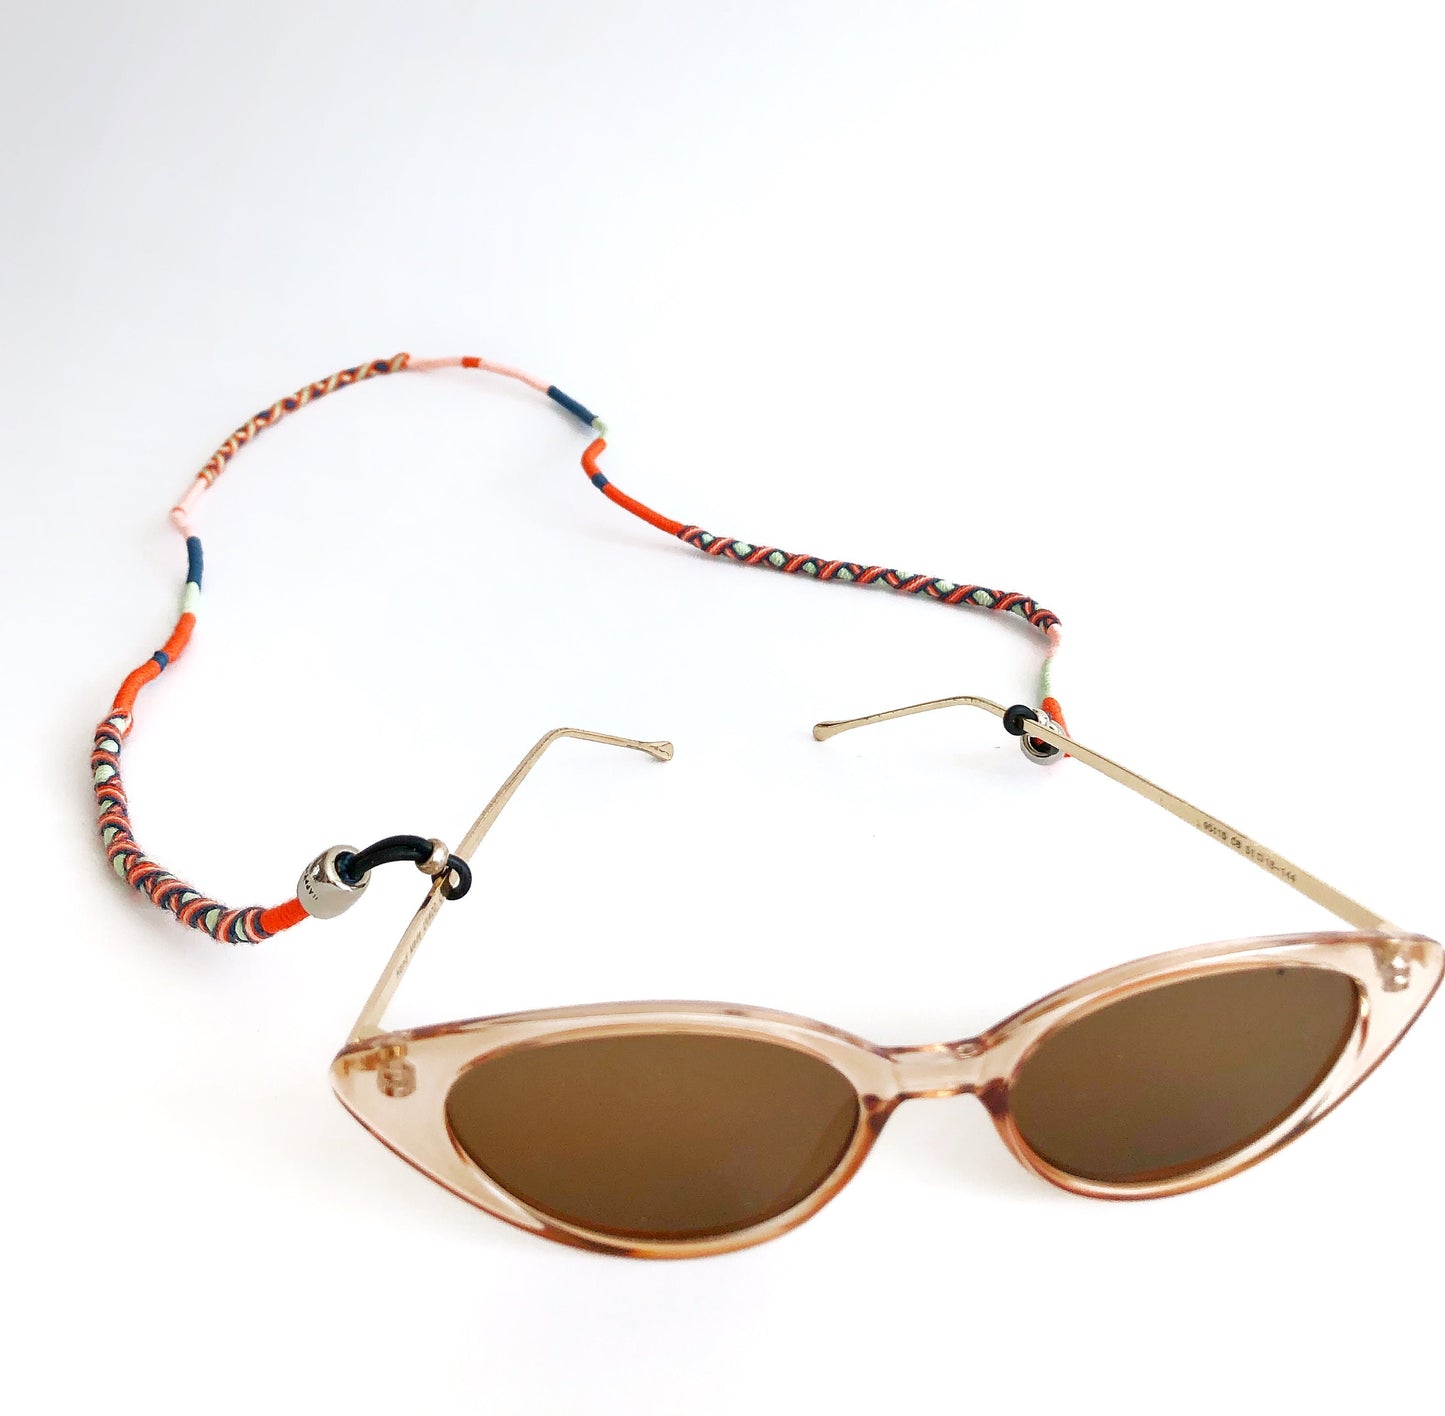 Handmade Glasses Chain, Cotton Yarn Sunglasses Strap, Multicolor Eye Glass Holder,Bohemian Hippie Glasses Accessories,Gift for Her,Boho Chic